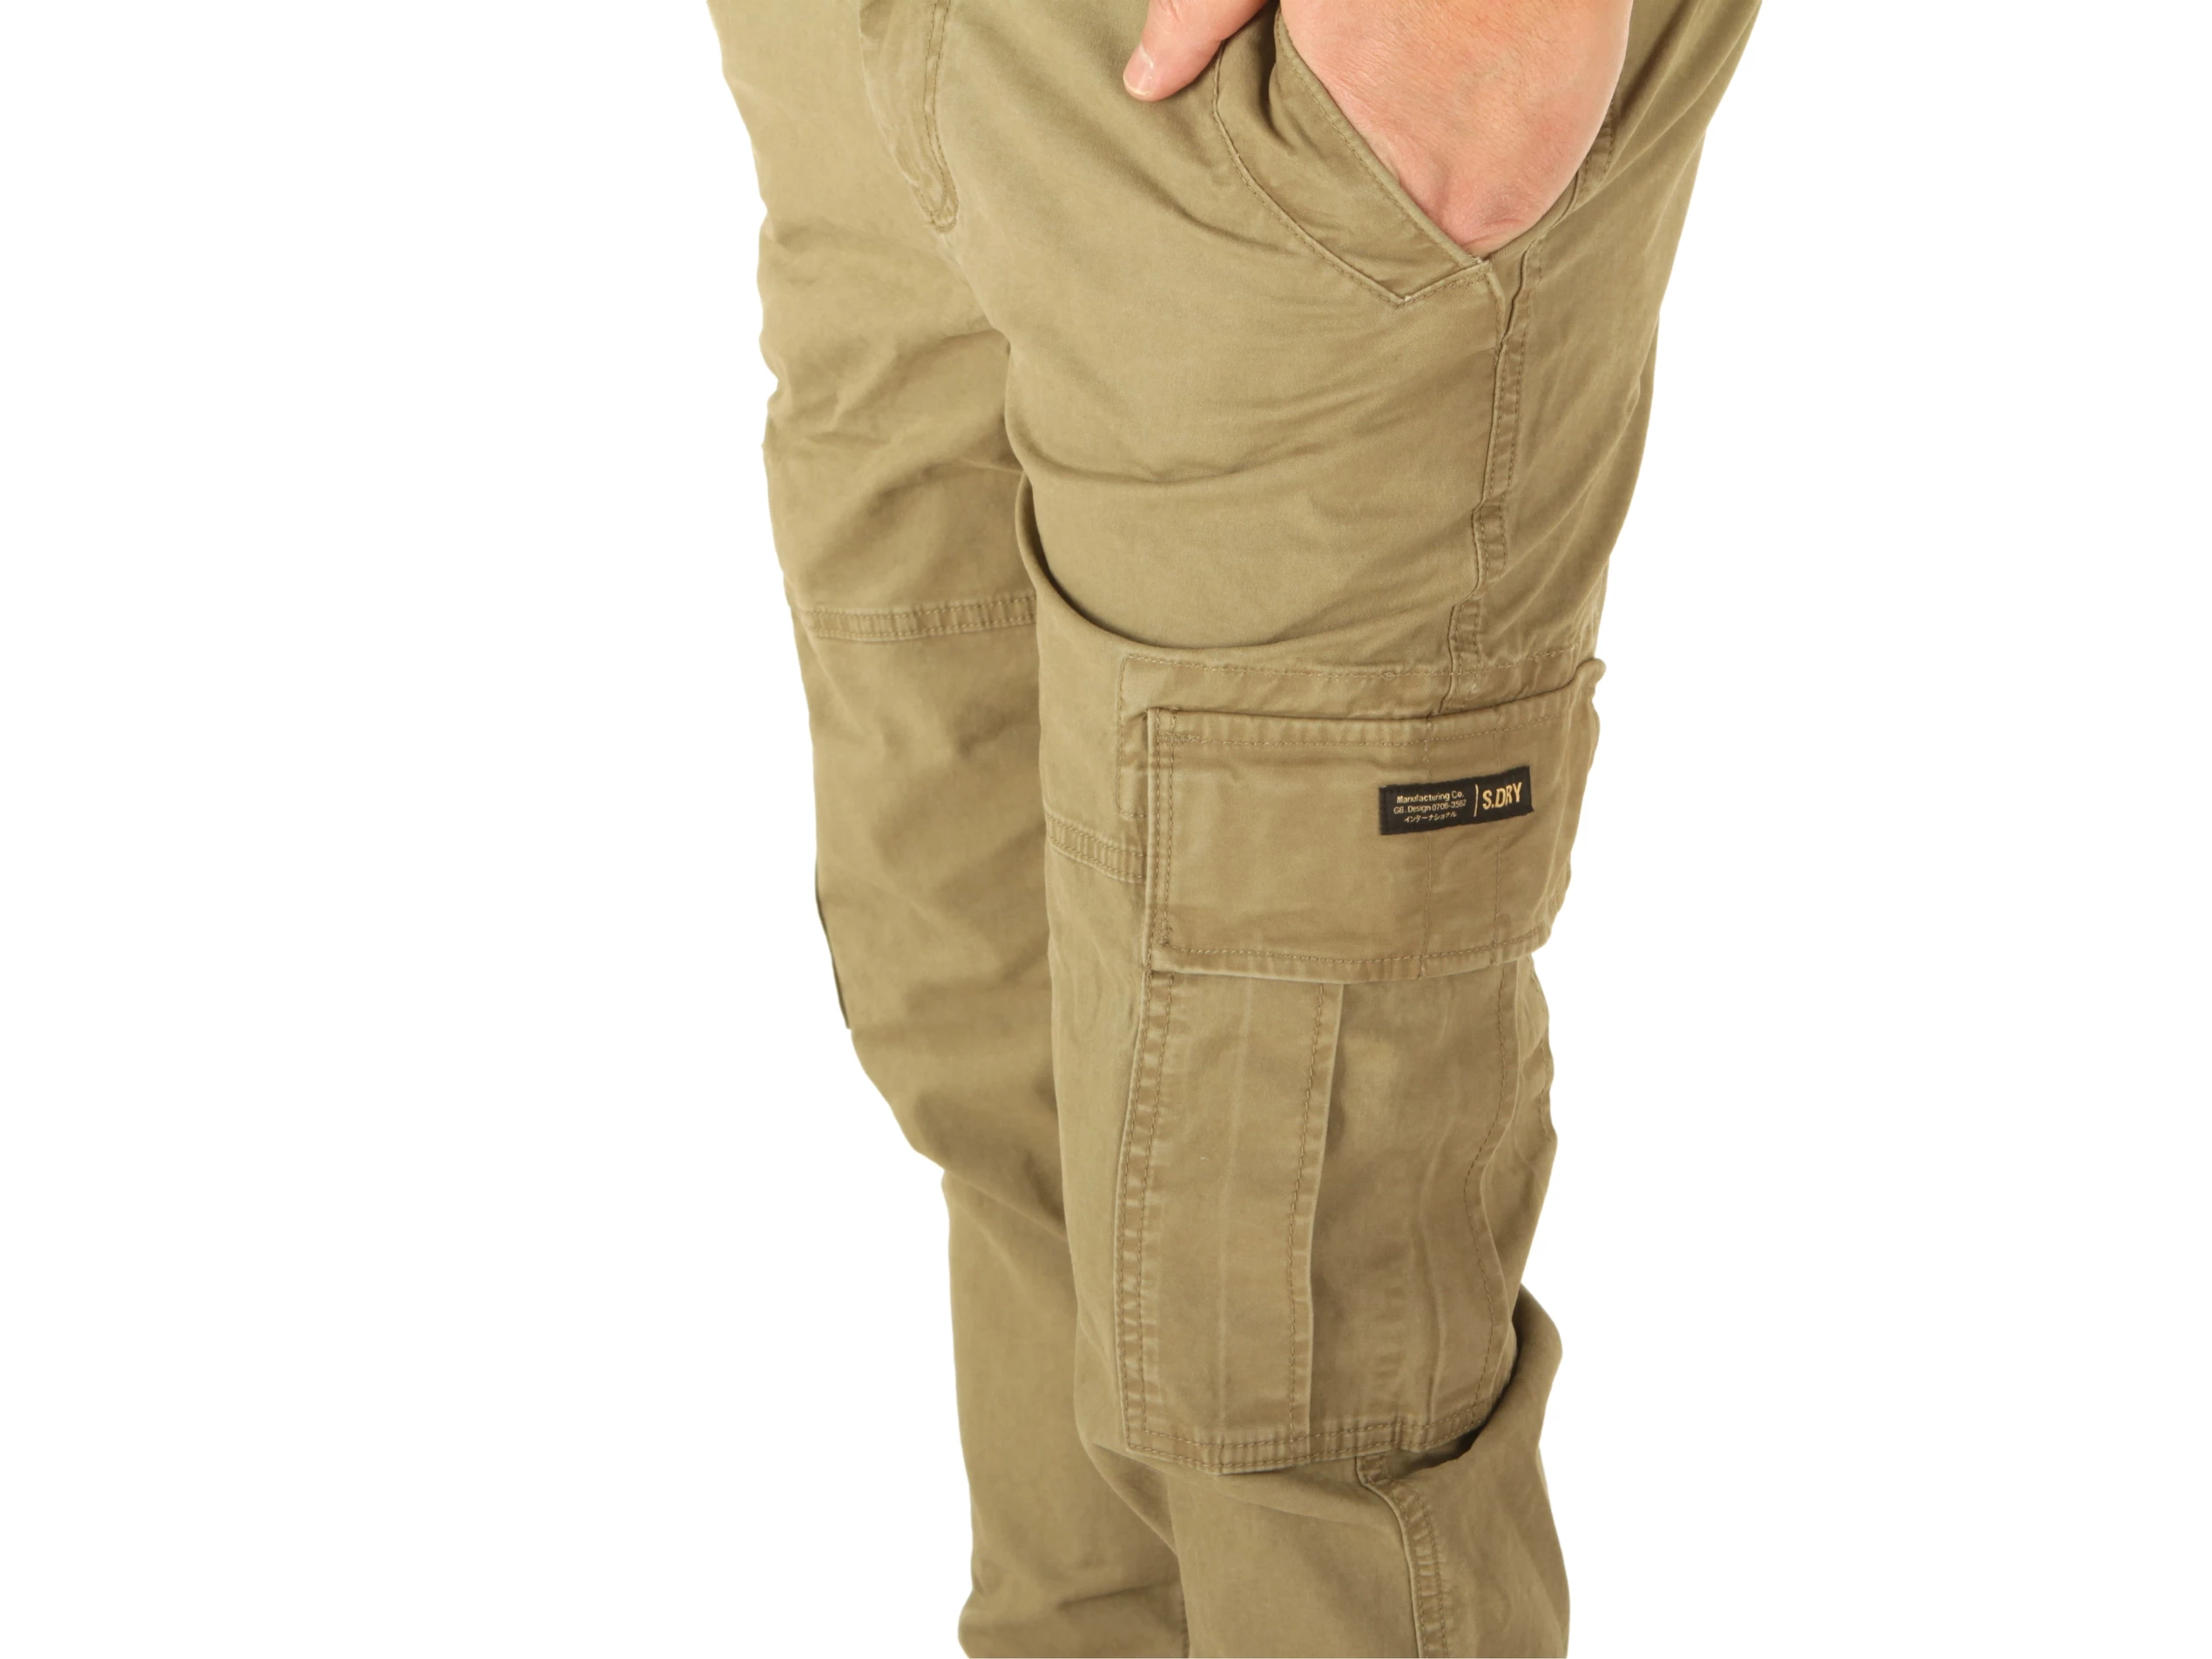 Men's Core Cargo Pants in Dress Beige